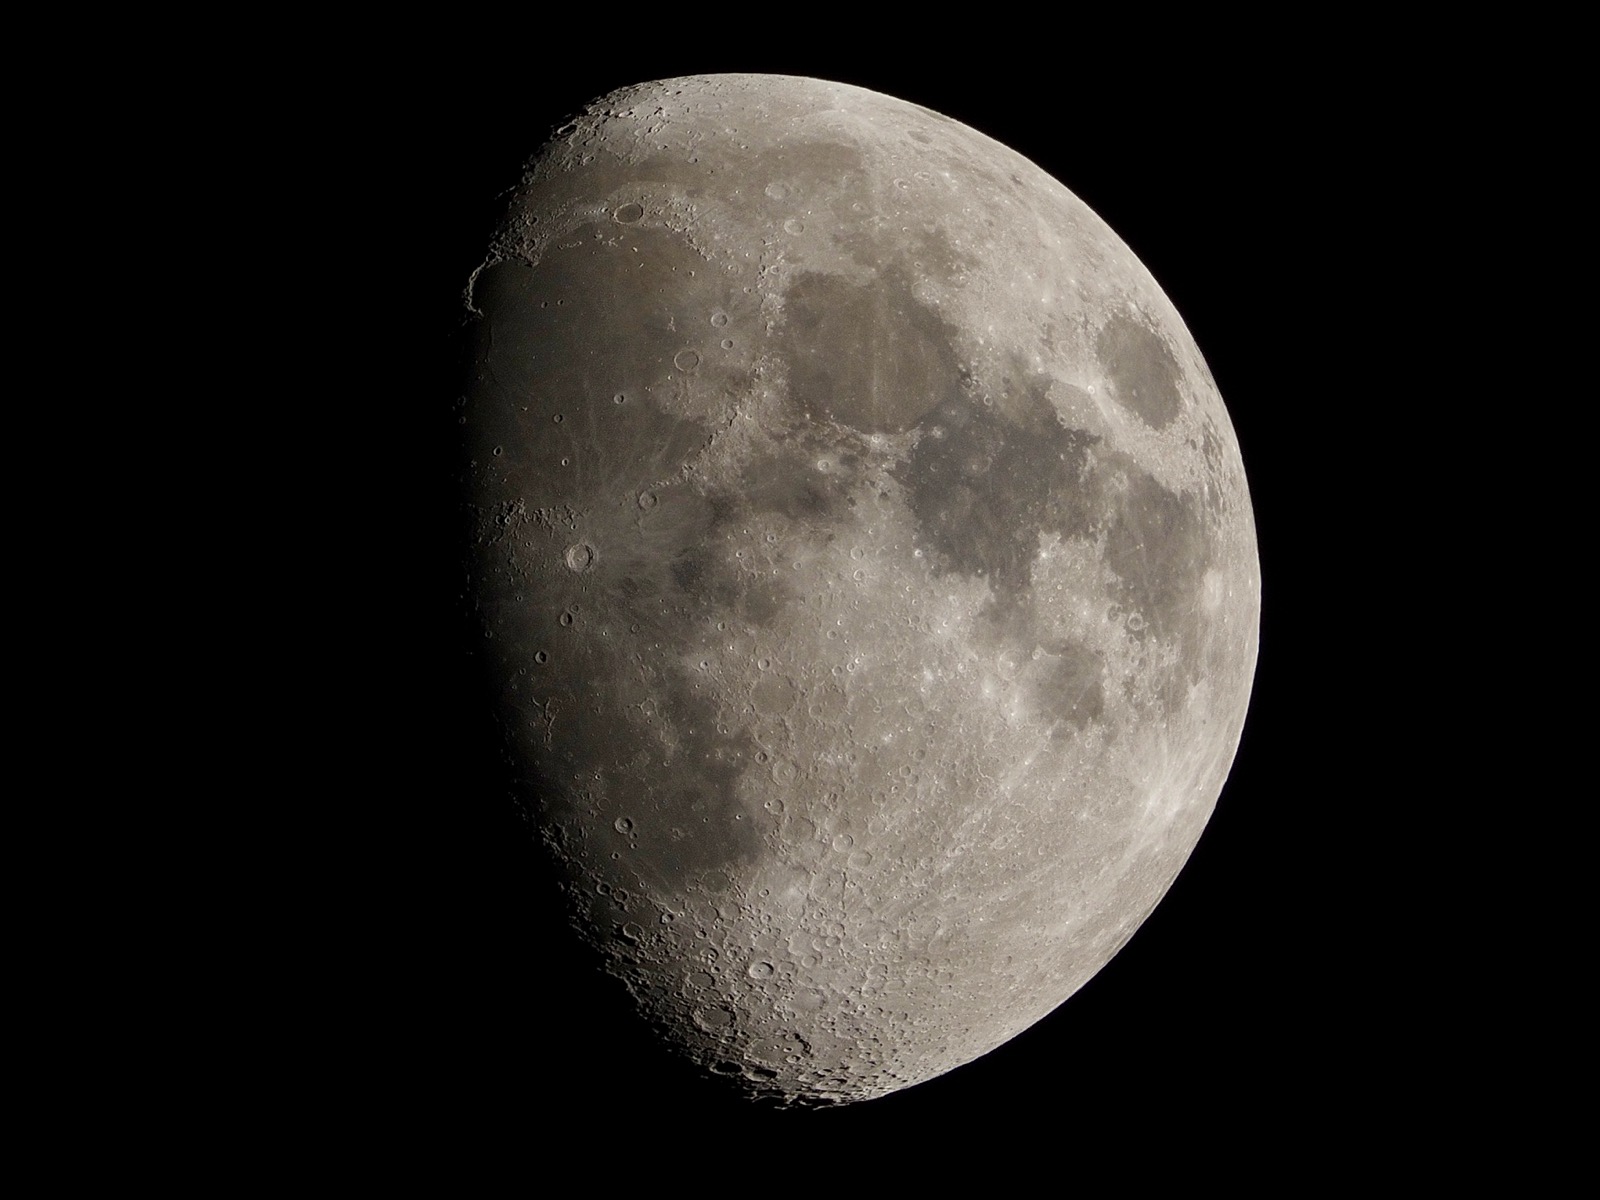 Closeup of the waxing gibbous moon, 71% illuminated.